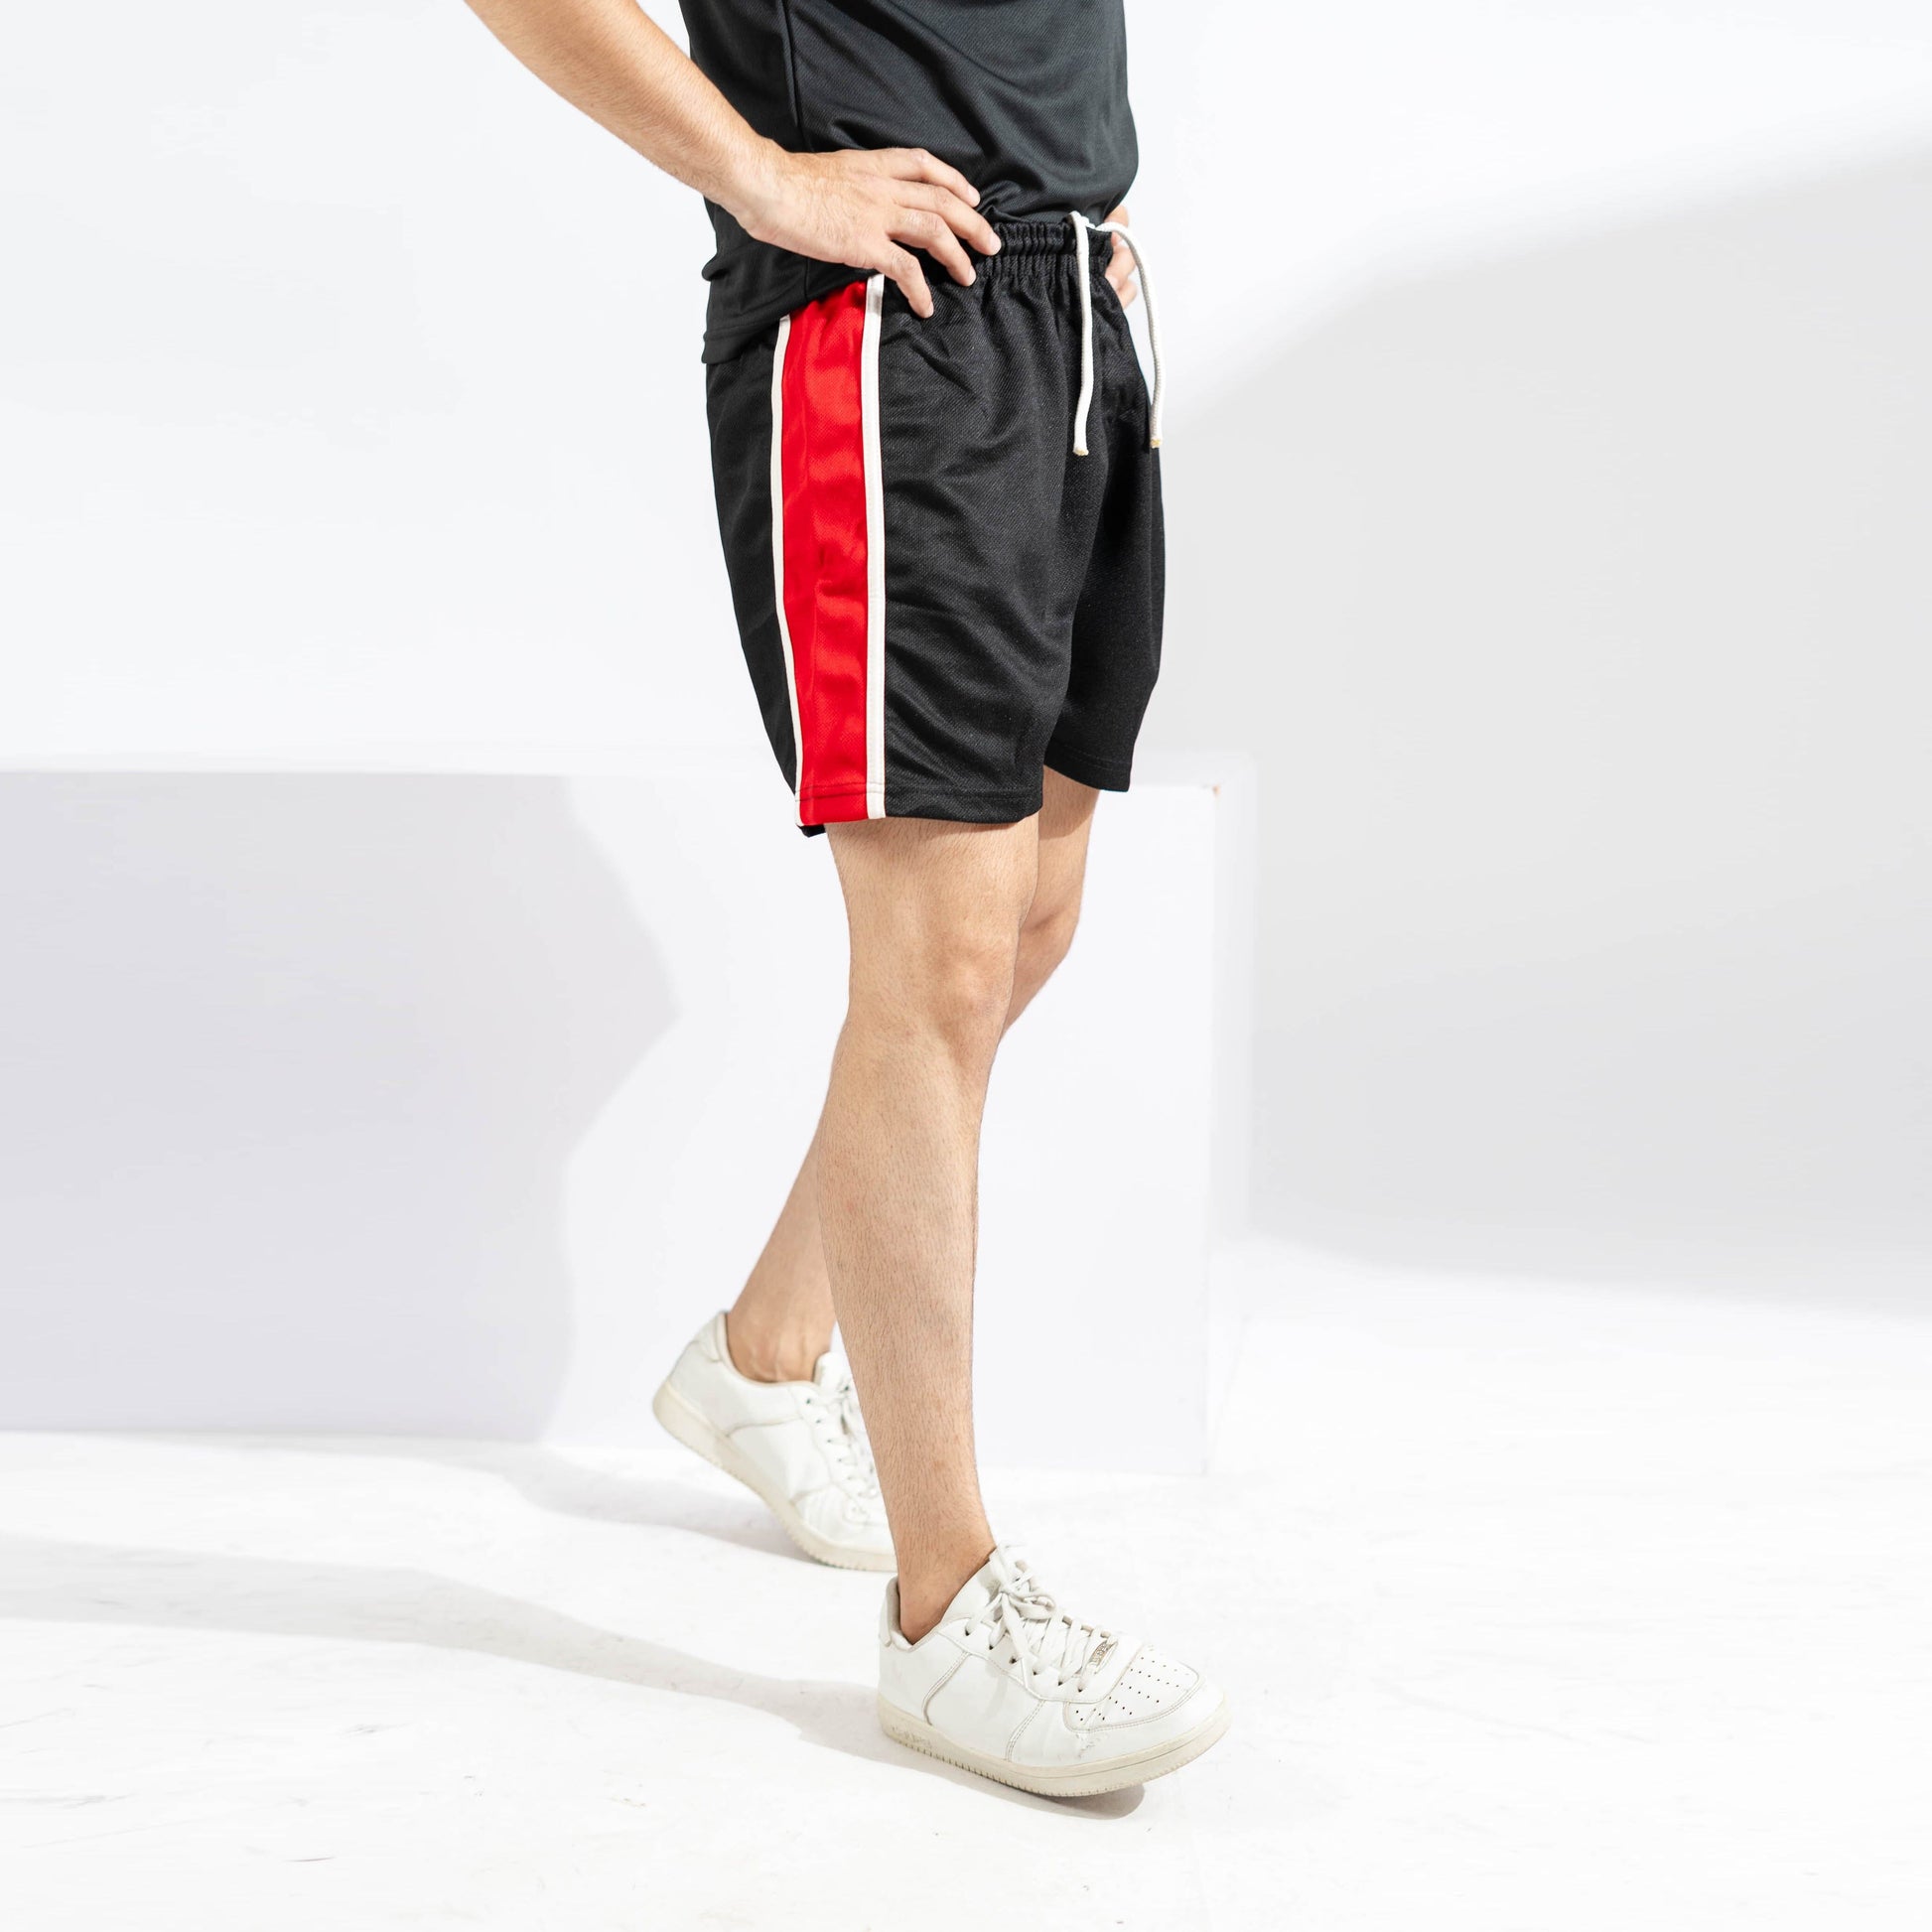 Falcon Men's Contrast panel Shorts Men's Shorts HAS Apparel Red & Black 2XS 